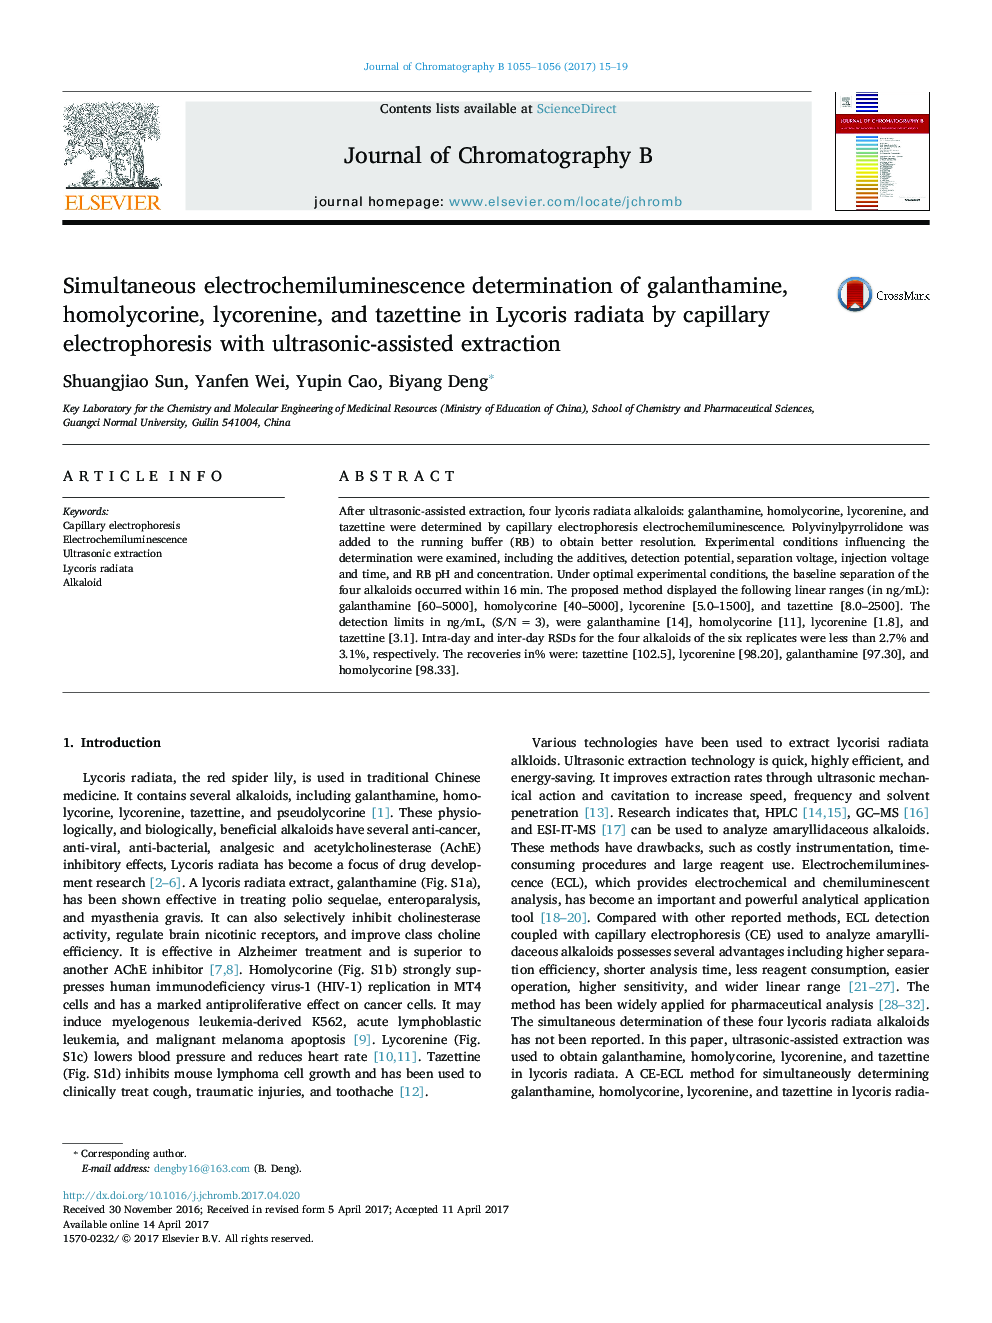 Simultaneous electrochemiluminescence determination of galanthamine, homolycorine, lycorenine, and tazettine in Lycoris radiata by capillary electrophoresis with ultrasonic-assisted extraction